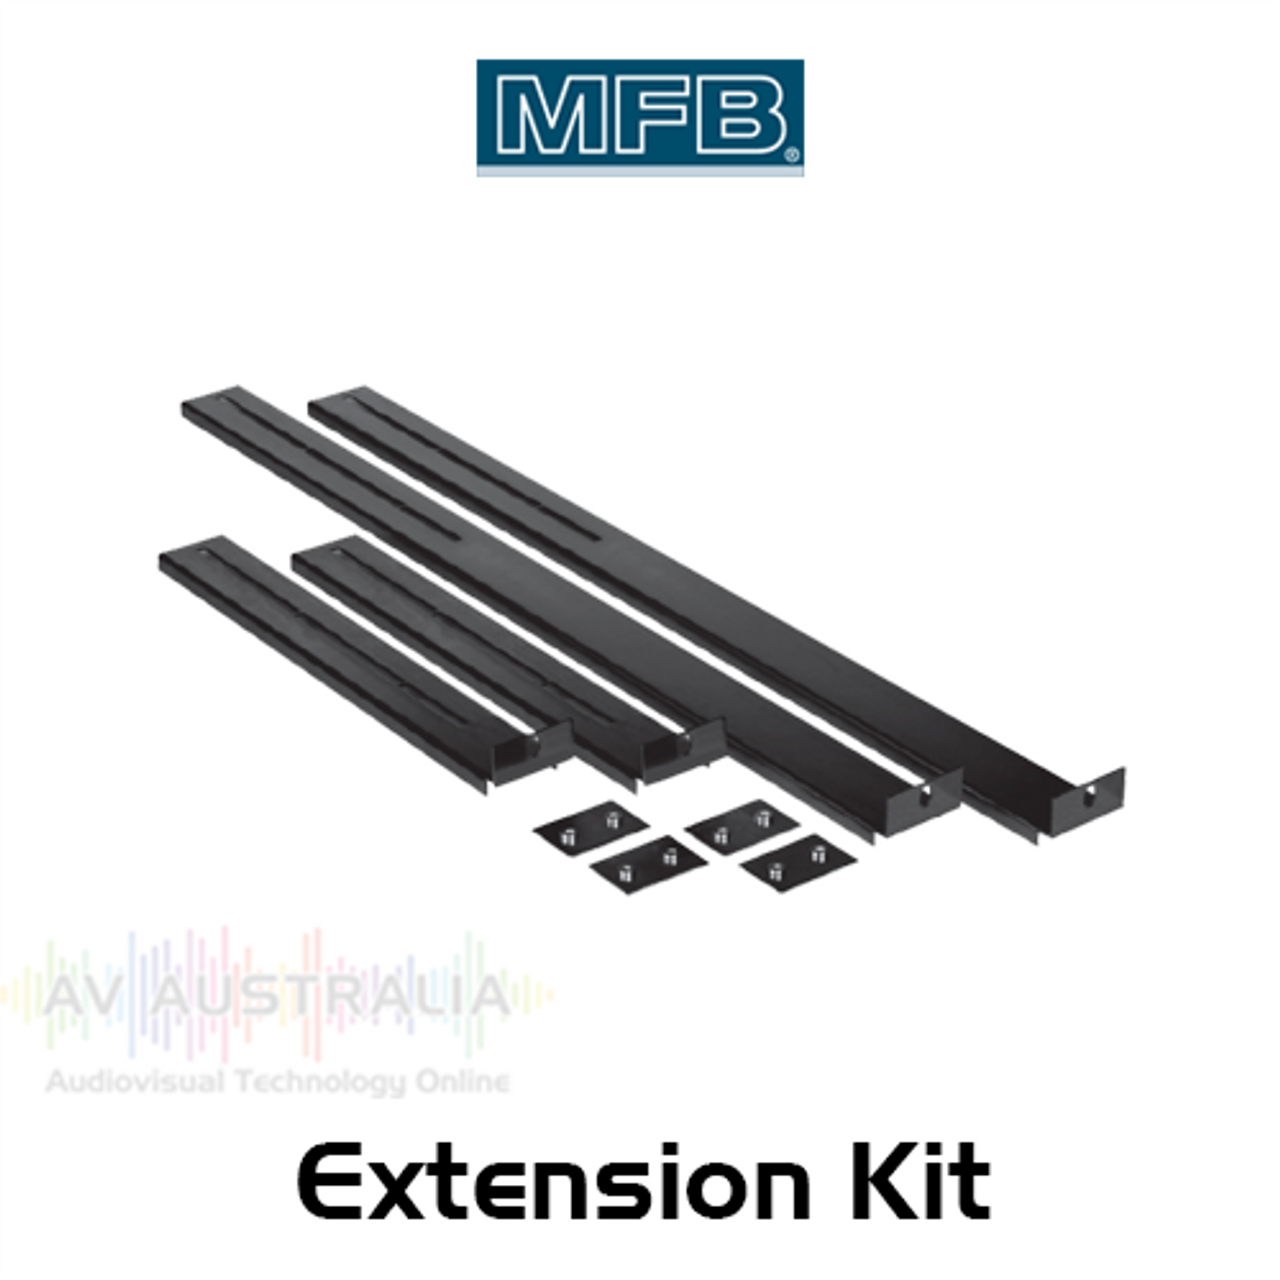 MFB Telescopic Extension Kit